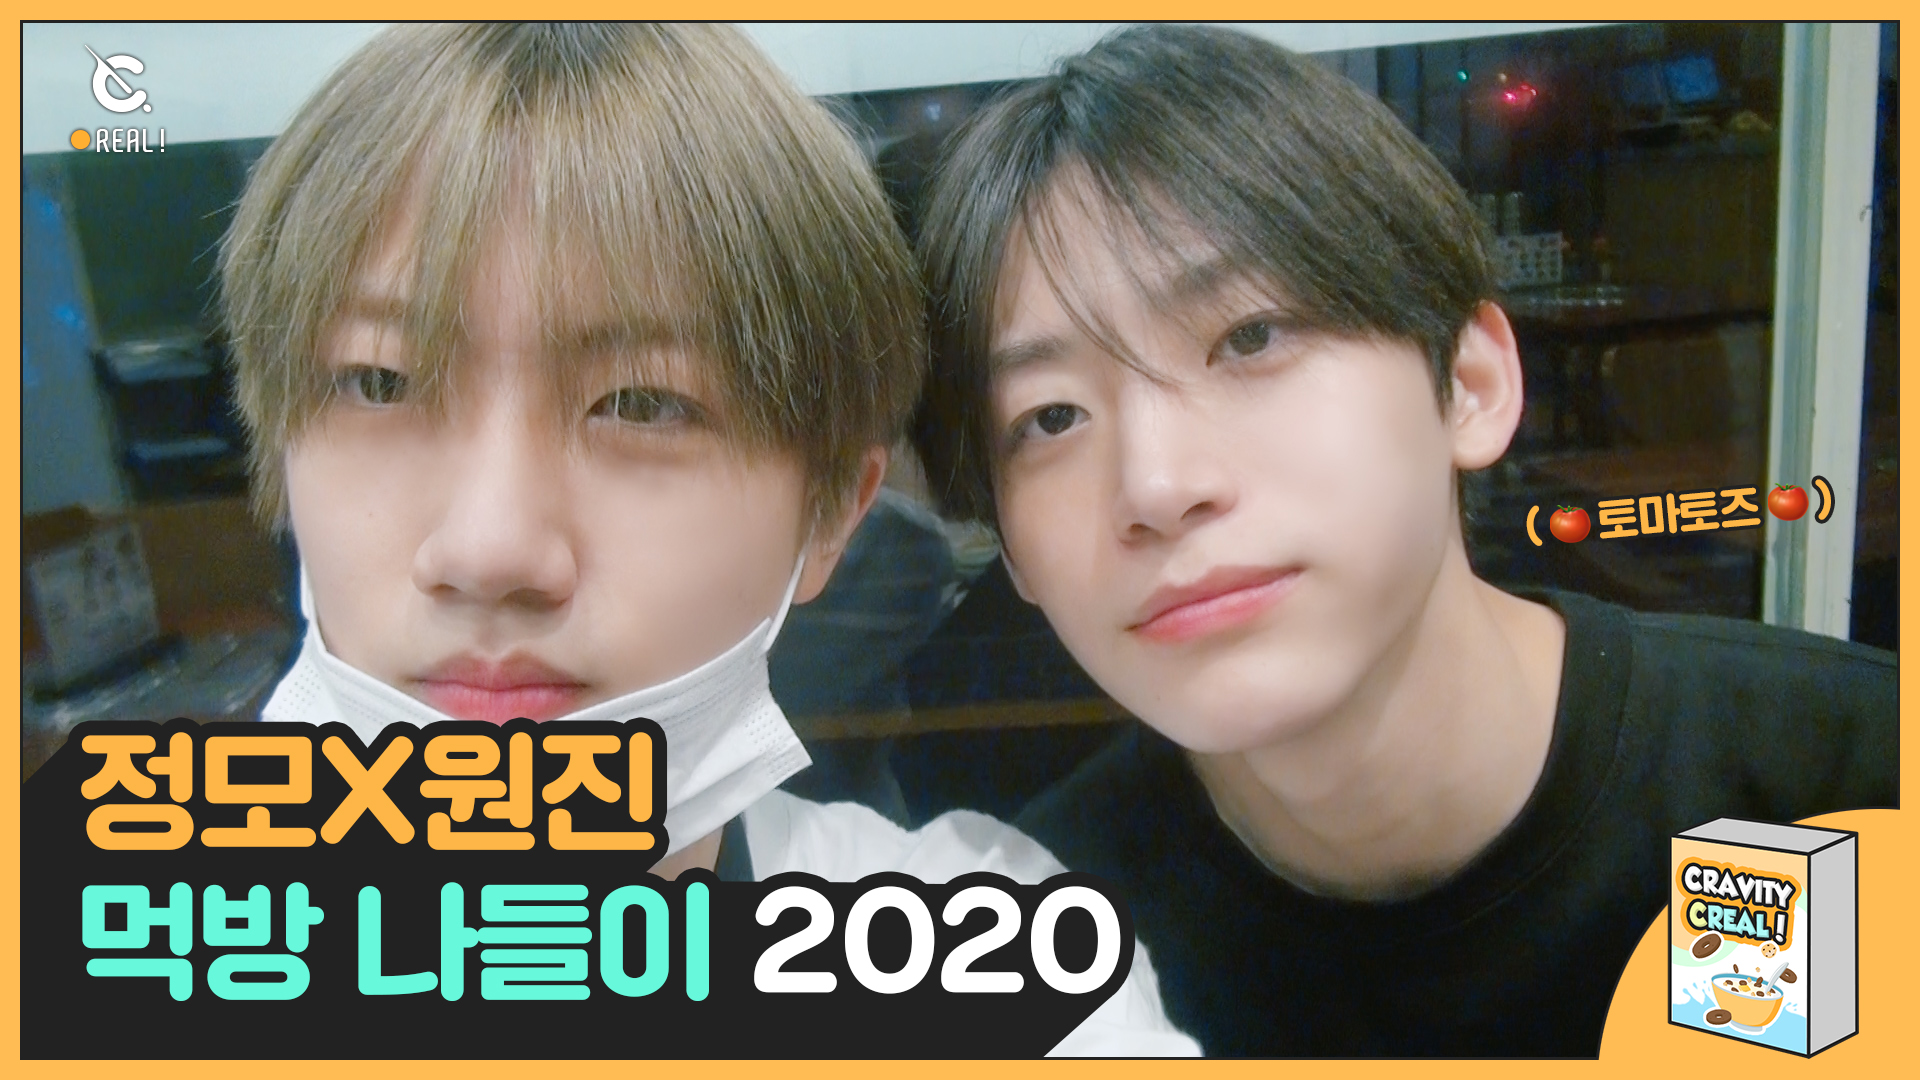 [C-Real] 정모X원진 먹방 나들이 2020 (Jungmo & Wonjin’s Mukbang Picnic 2020) l 크래비티 (CRAVITY)